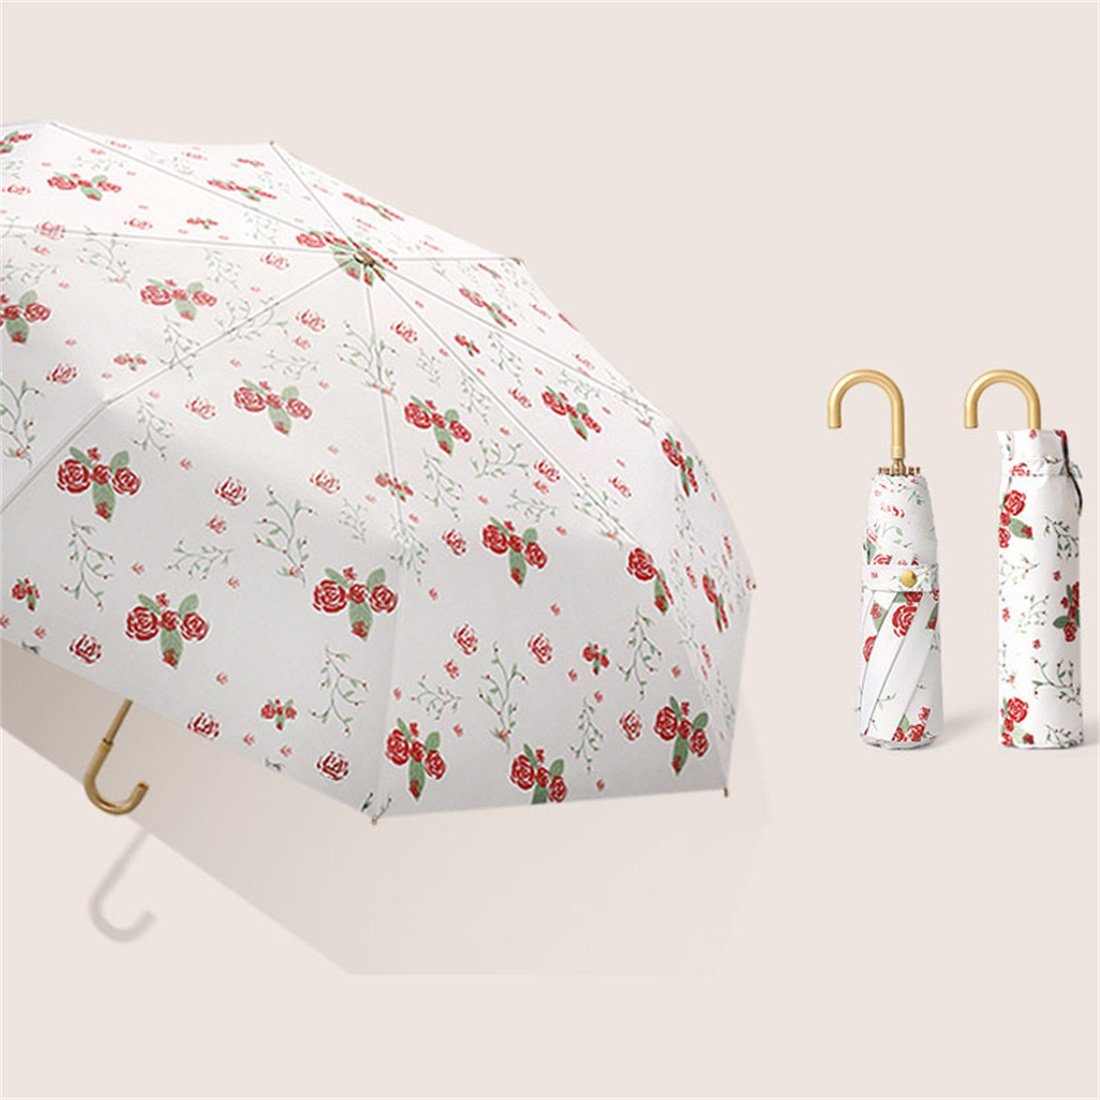 Hakenschirm,Blumenmuster-Regenschirm,regenfest UV-Faltschirm,gebogener Taschenregenschirm DÖRÖY